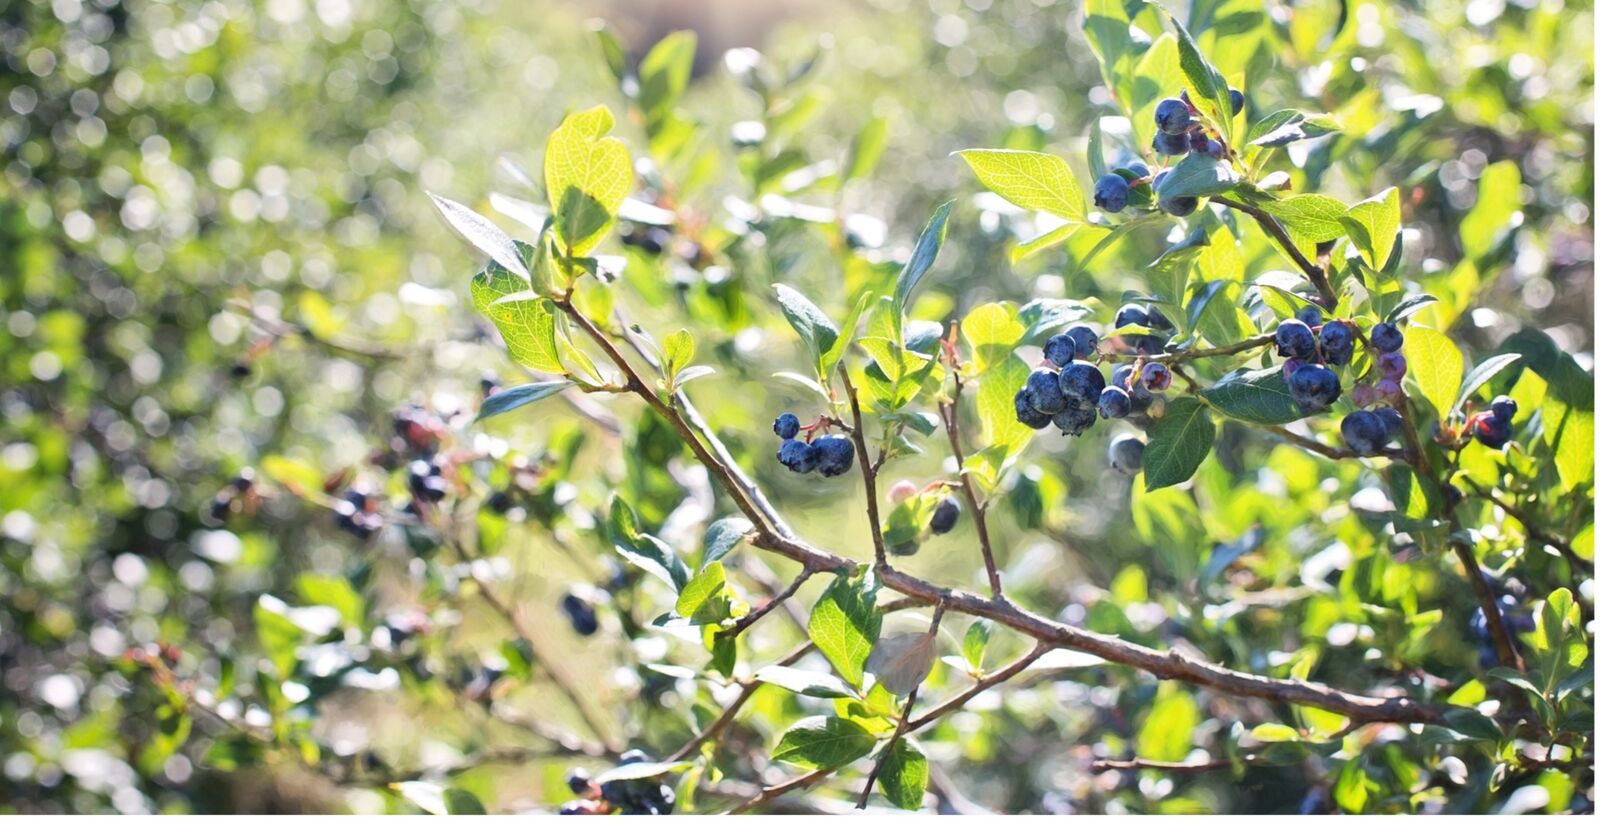 Proper care for blueberries